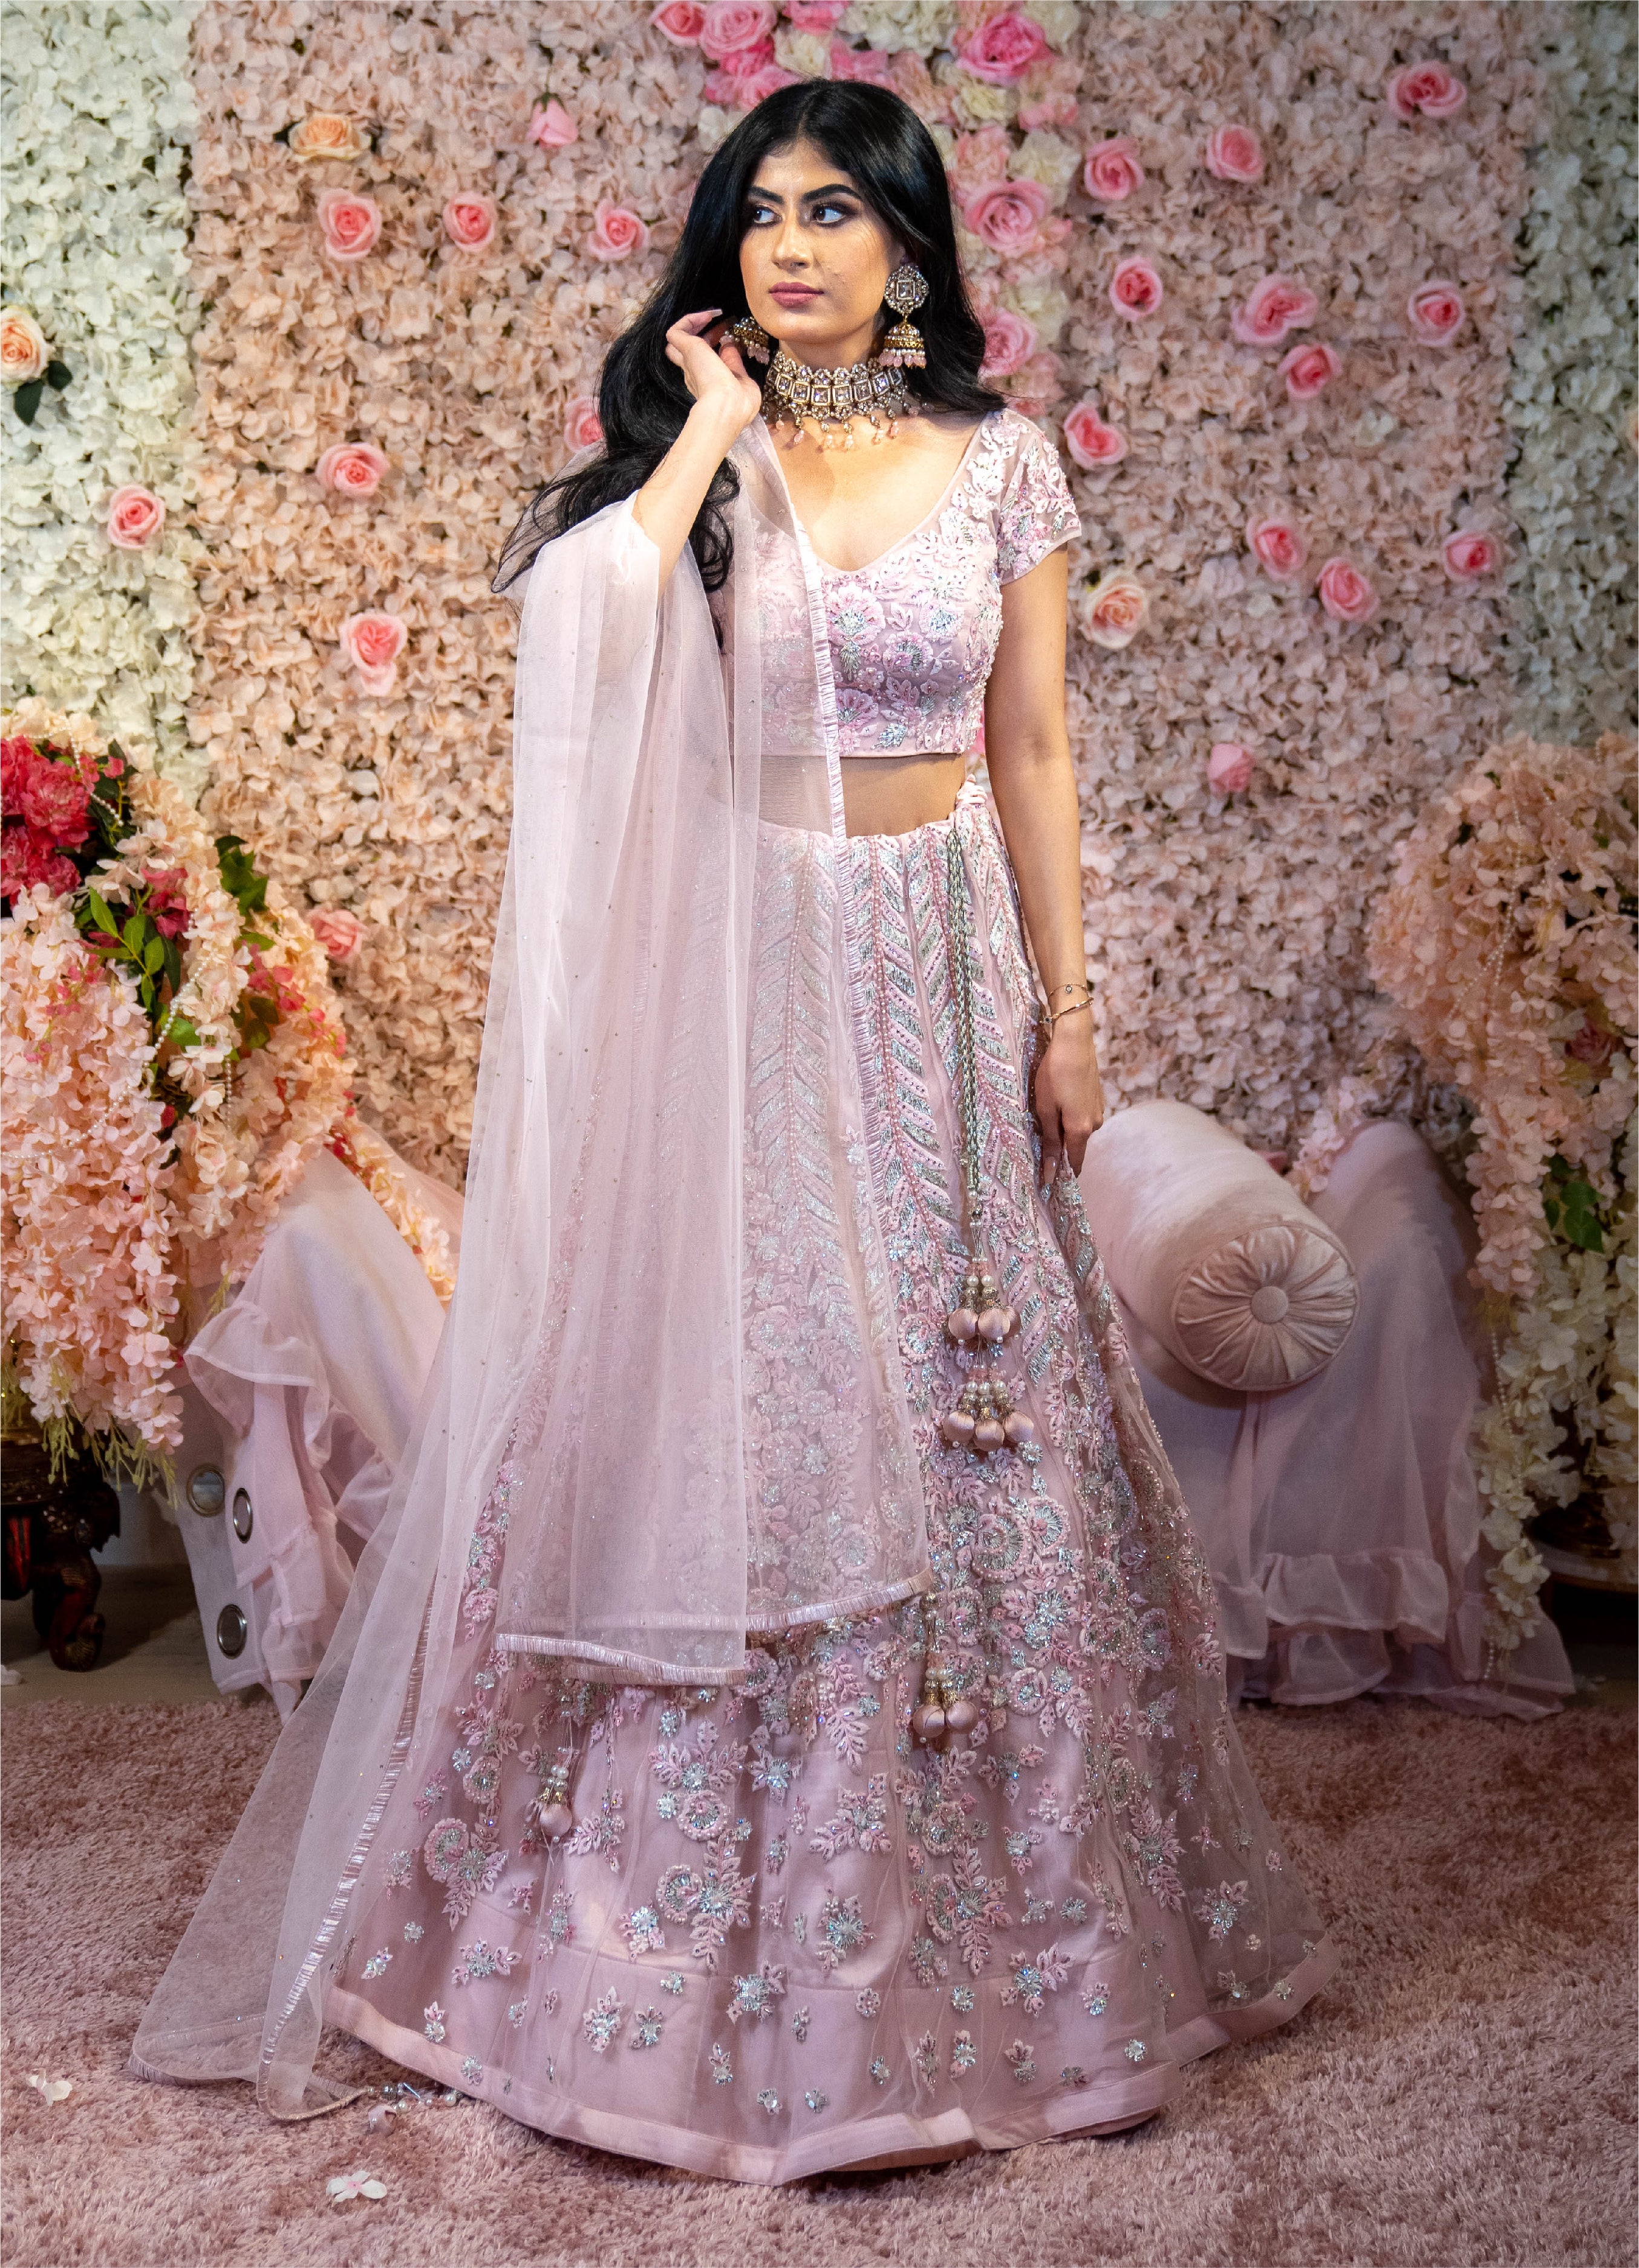 Natasha Dalal Label Lehenga | Bridal wear, Bridal, Indian bride